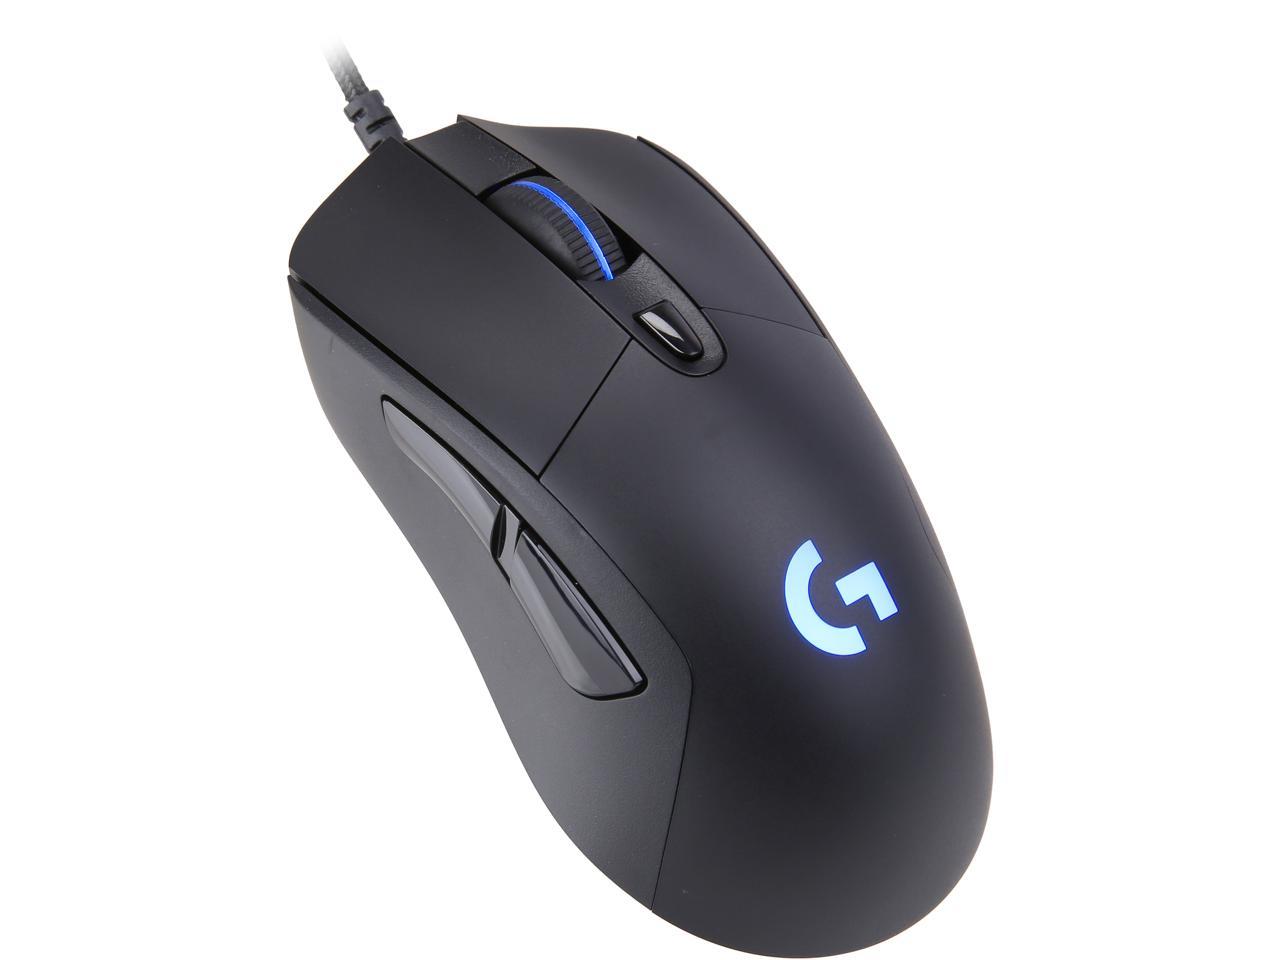 Logitech G403 Hero 25K Mouse, Lightsync RGB, Lightweight optional, Braided Cable, 25, 600 DPI, Rubber Side Grips - Newegg.com